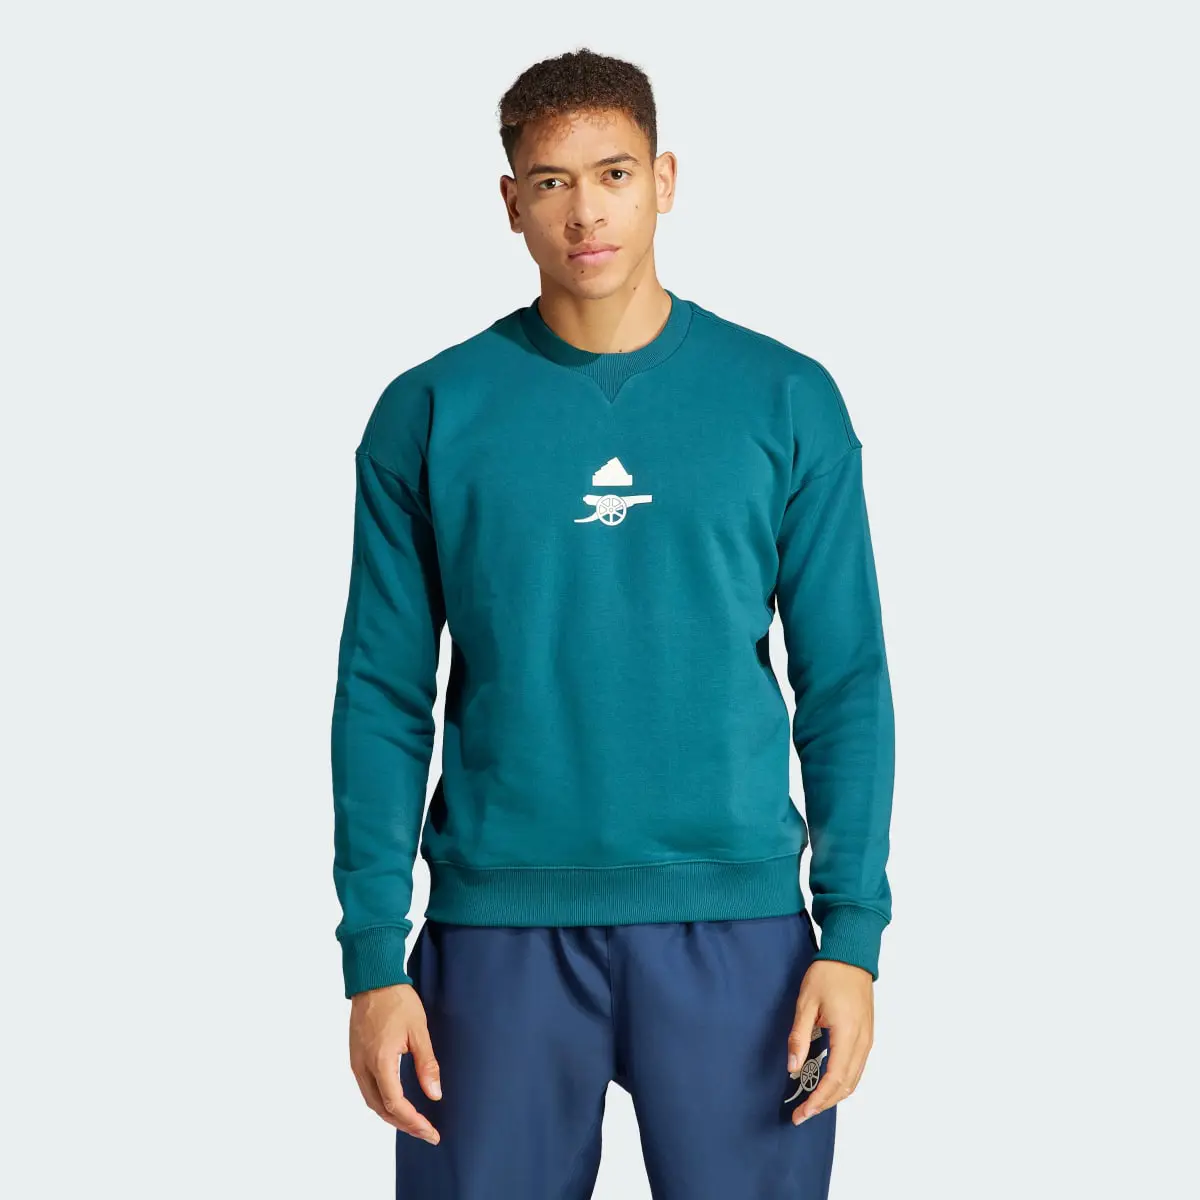 Adidas Sweatshirt de Algodão LFSTLR do Arsenal. 2